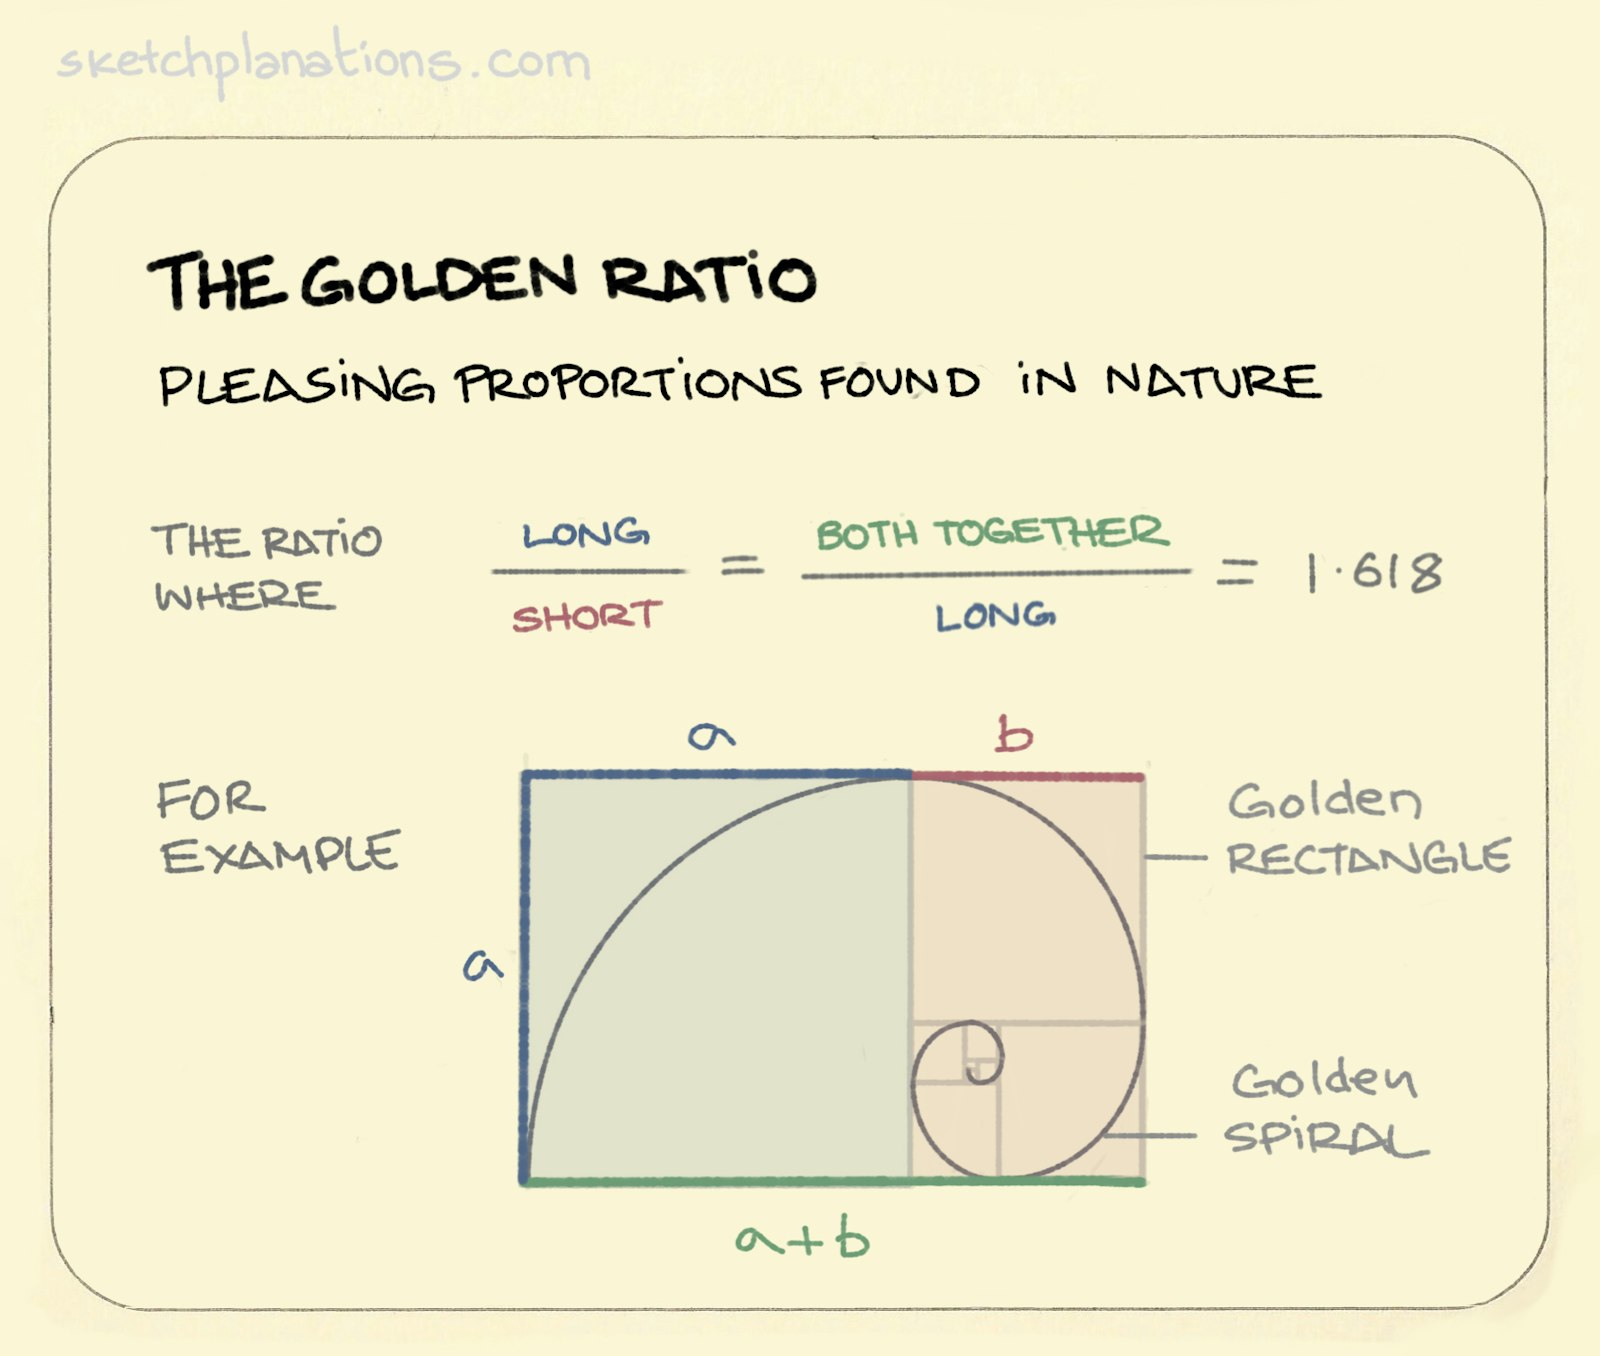 The golden ratio. - Sketchplanations